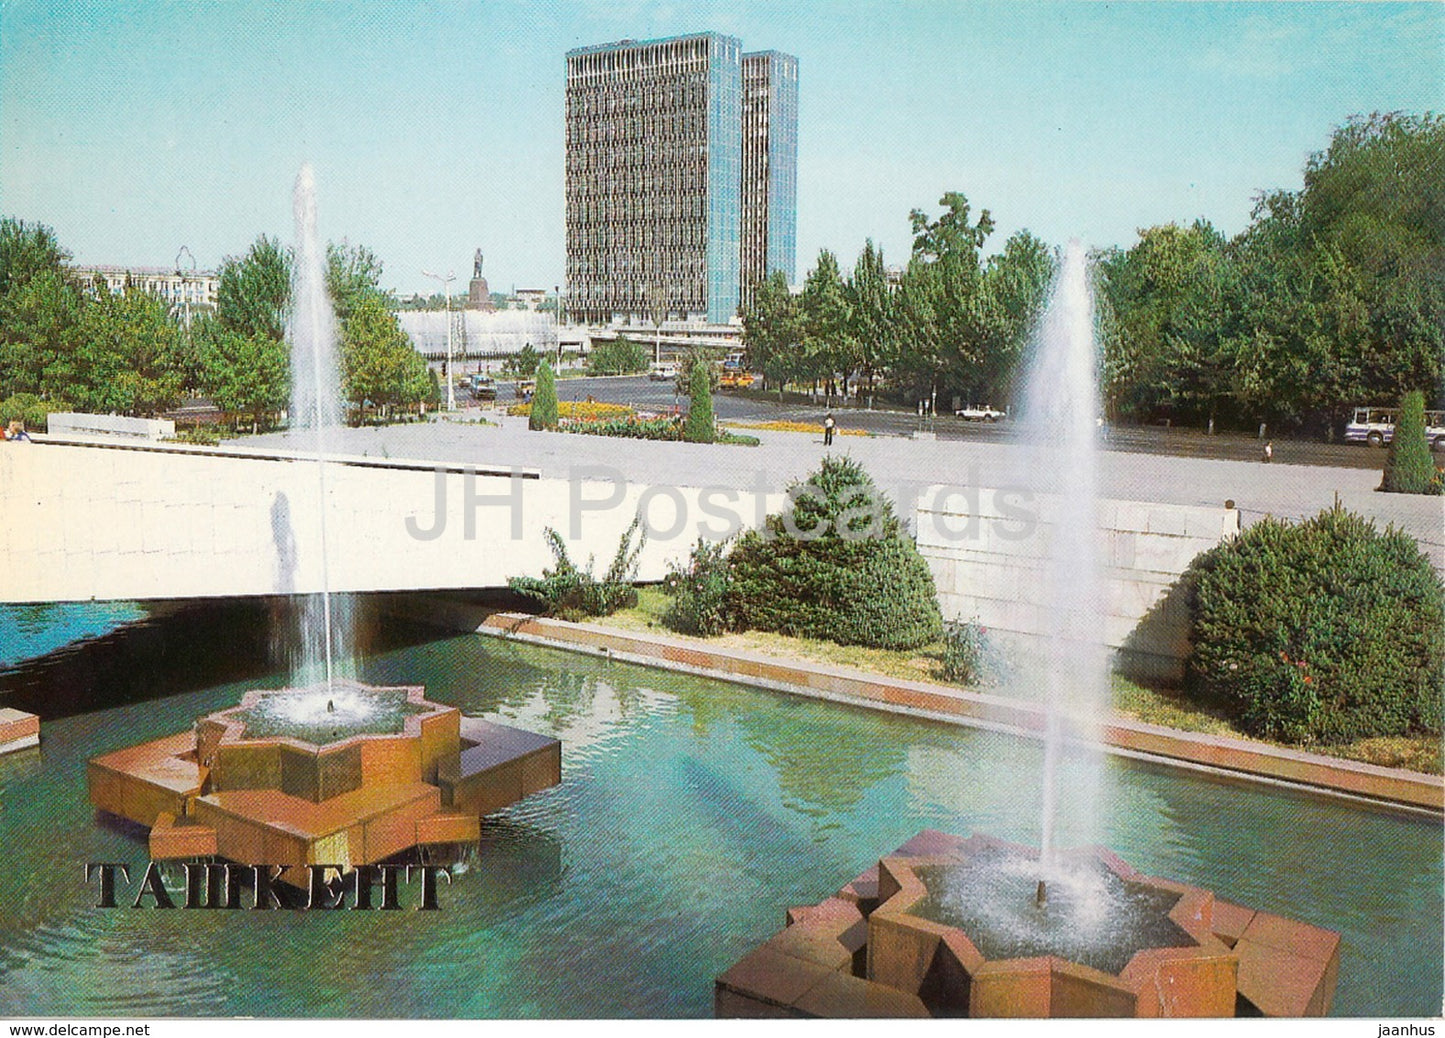 Tashkent - Administrative Building in Lenin Square - 1983 - Uzbekistan USSR - unused - JH Postcards